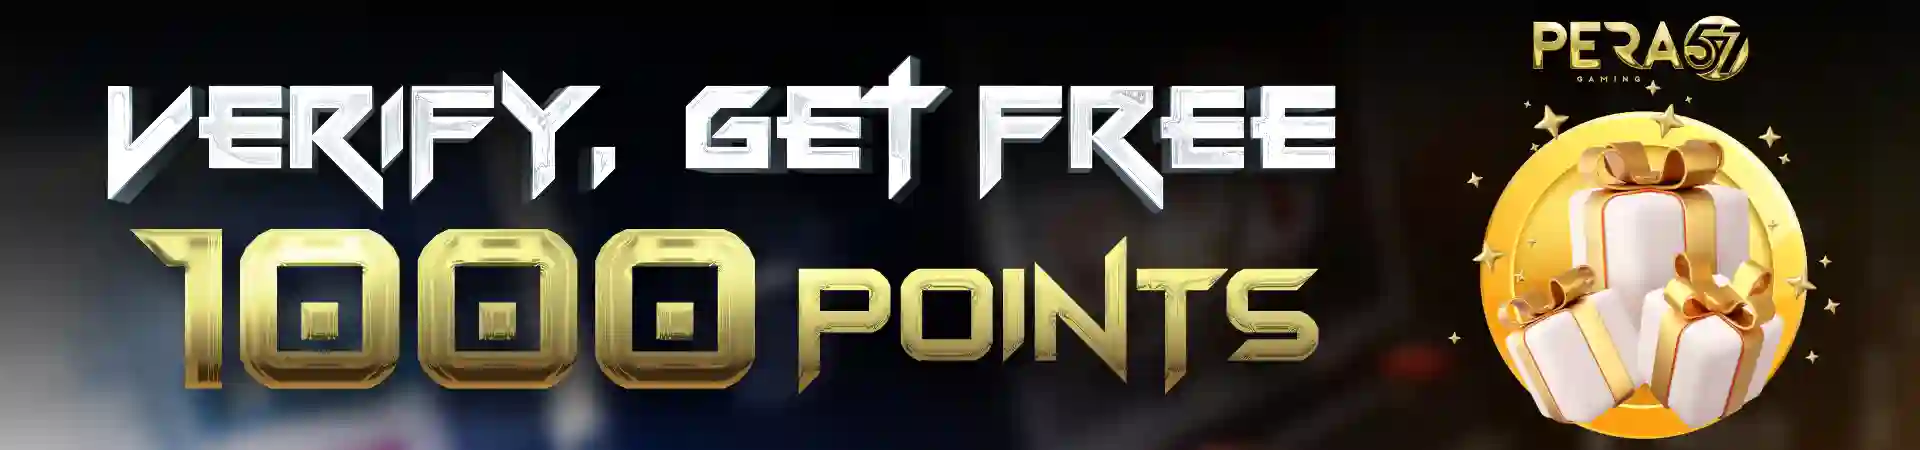 pera57 verify get free 1000 points